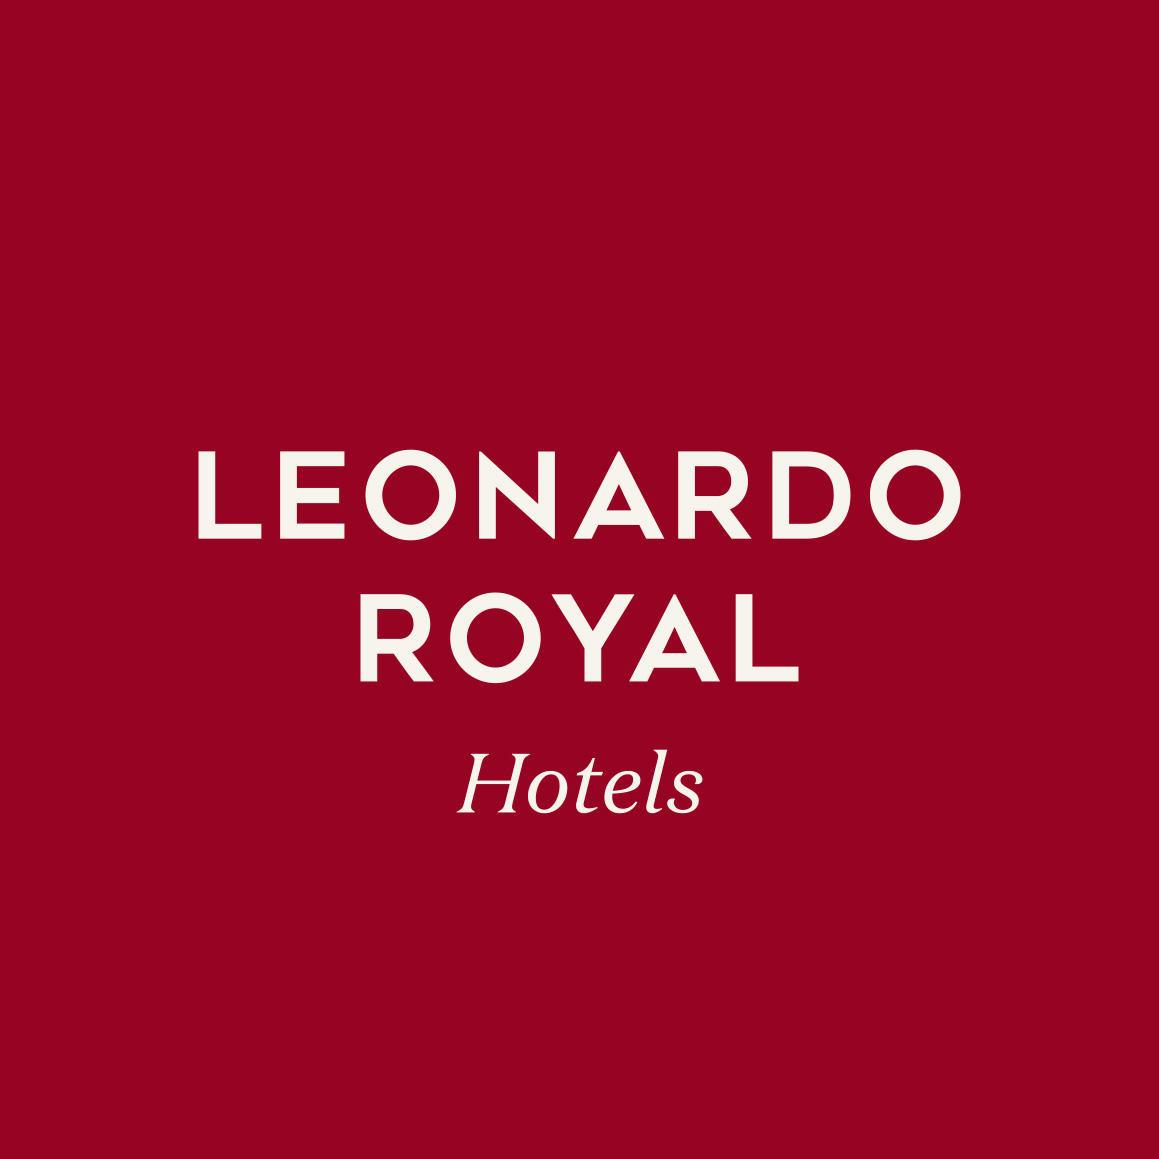 Leonardo Royal Hotel Birmingham Logo